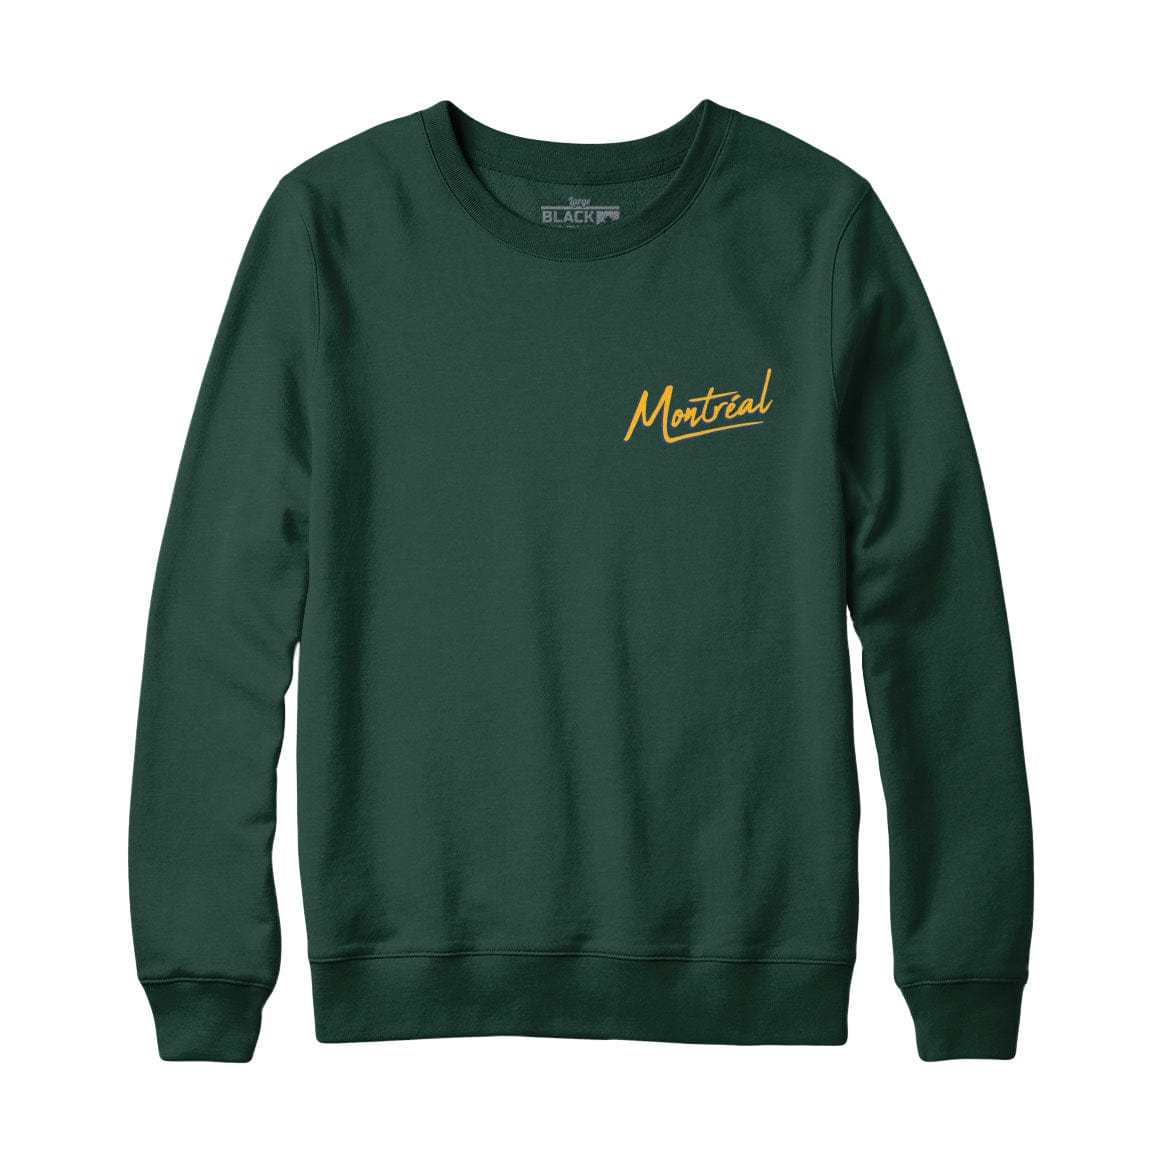 Montreal Signature Sweatshirt and Hoodie